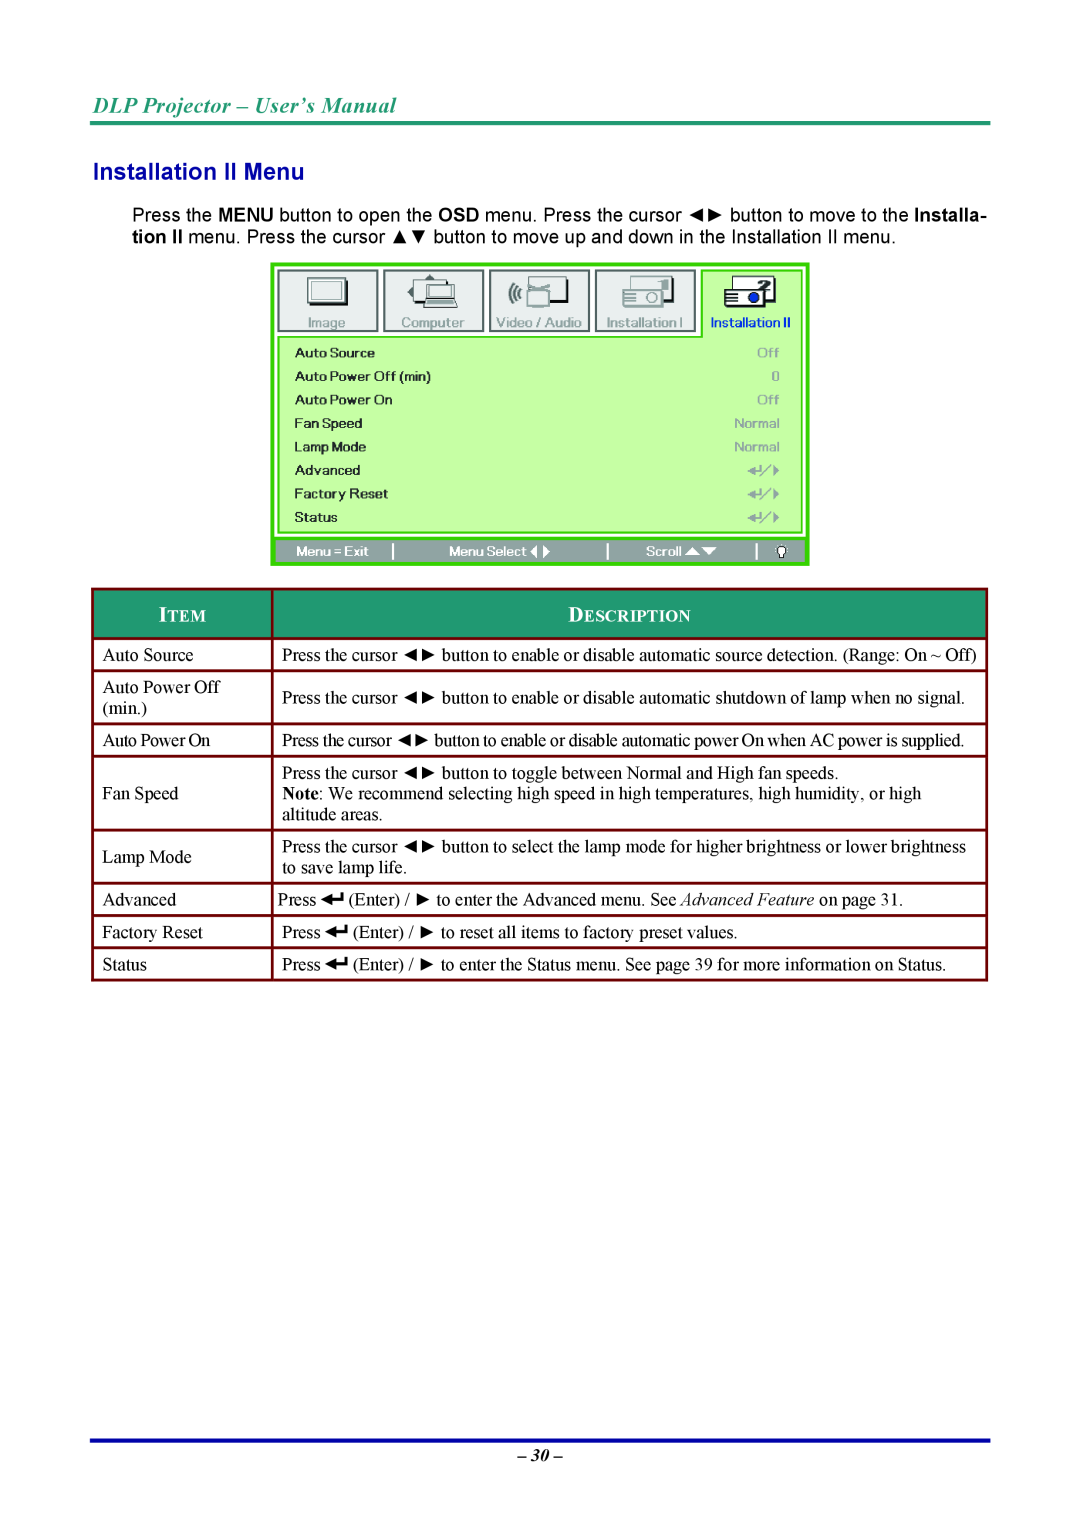 Vivitek D7 user manual Installation II Menu, DLP Projector - User’s Manual, Description 